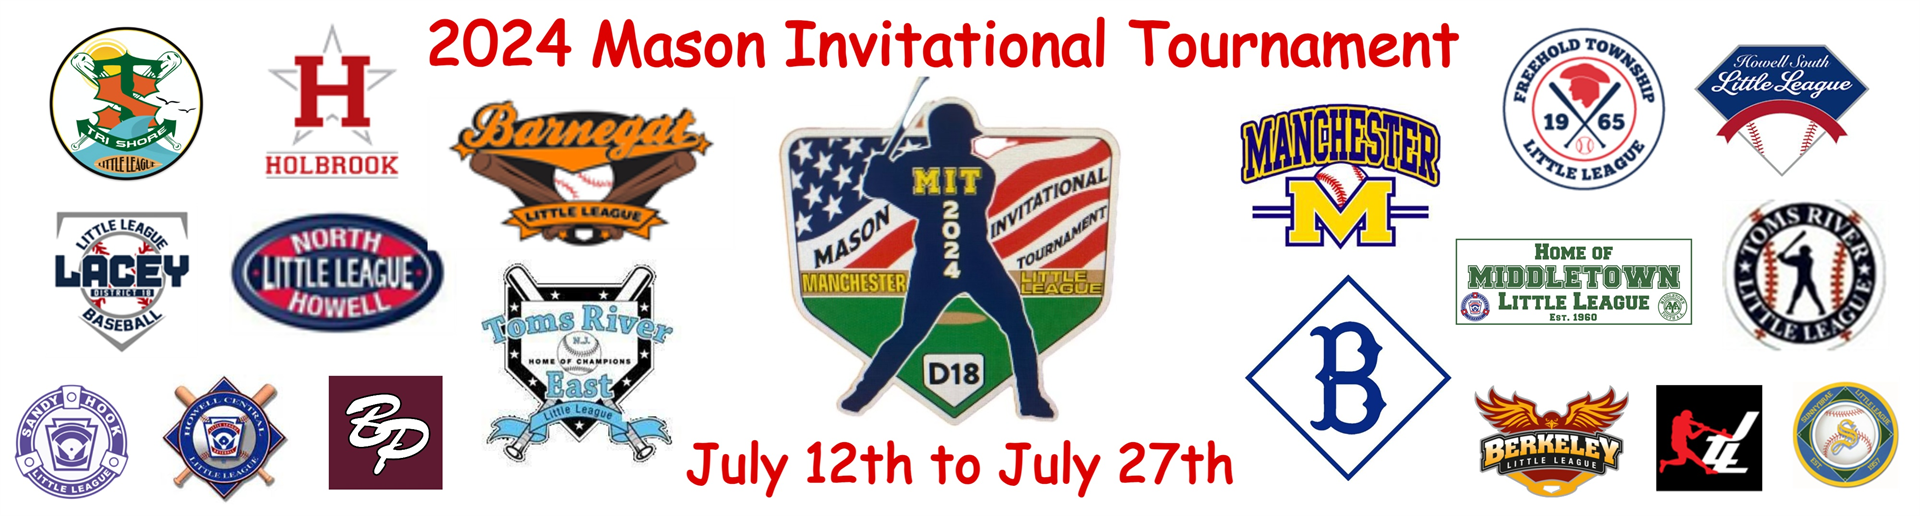 16th ANNUAL Mason Invitational Tournament (2024)